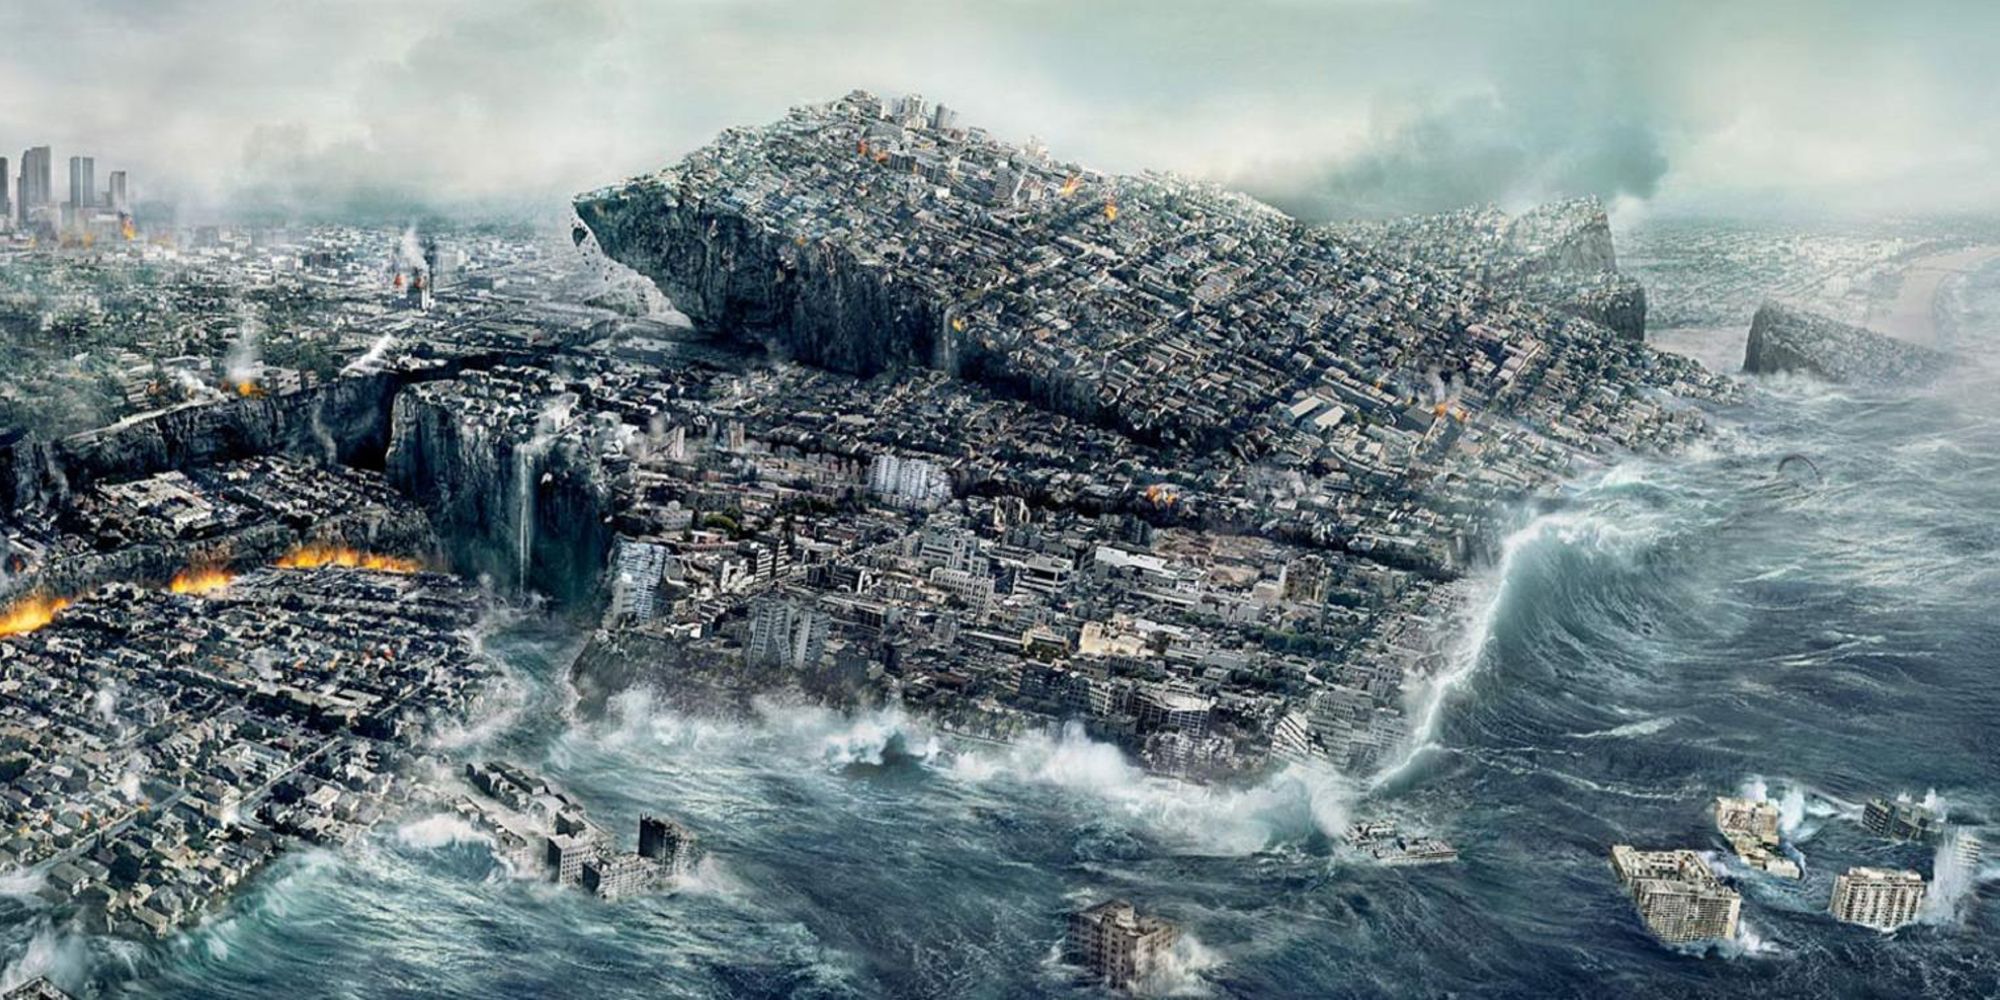 Sinking of Los Angeles in Movie 2012